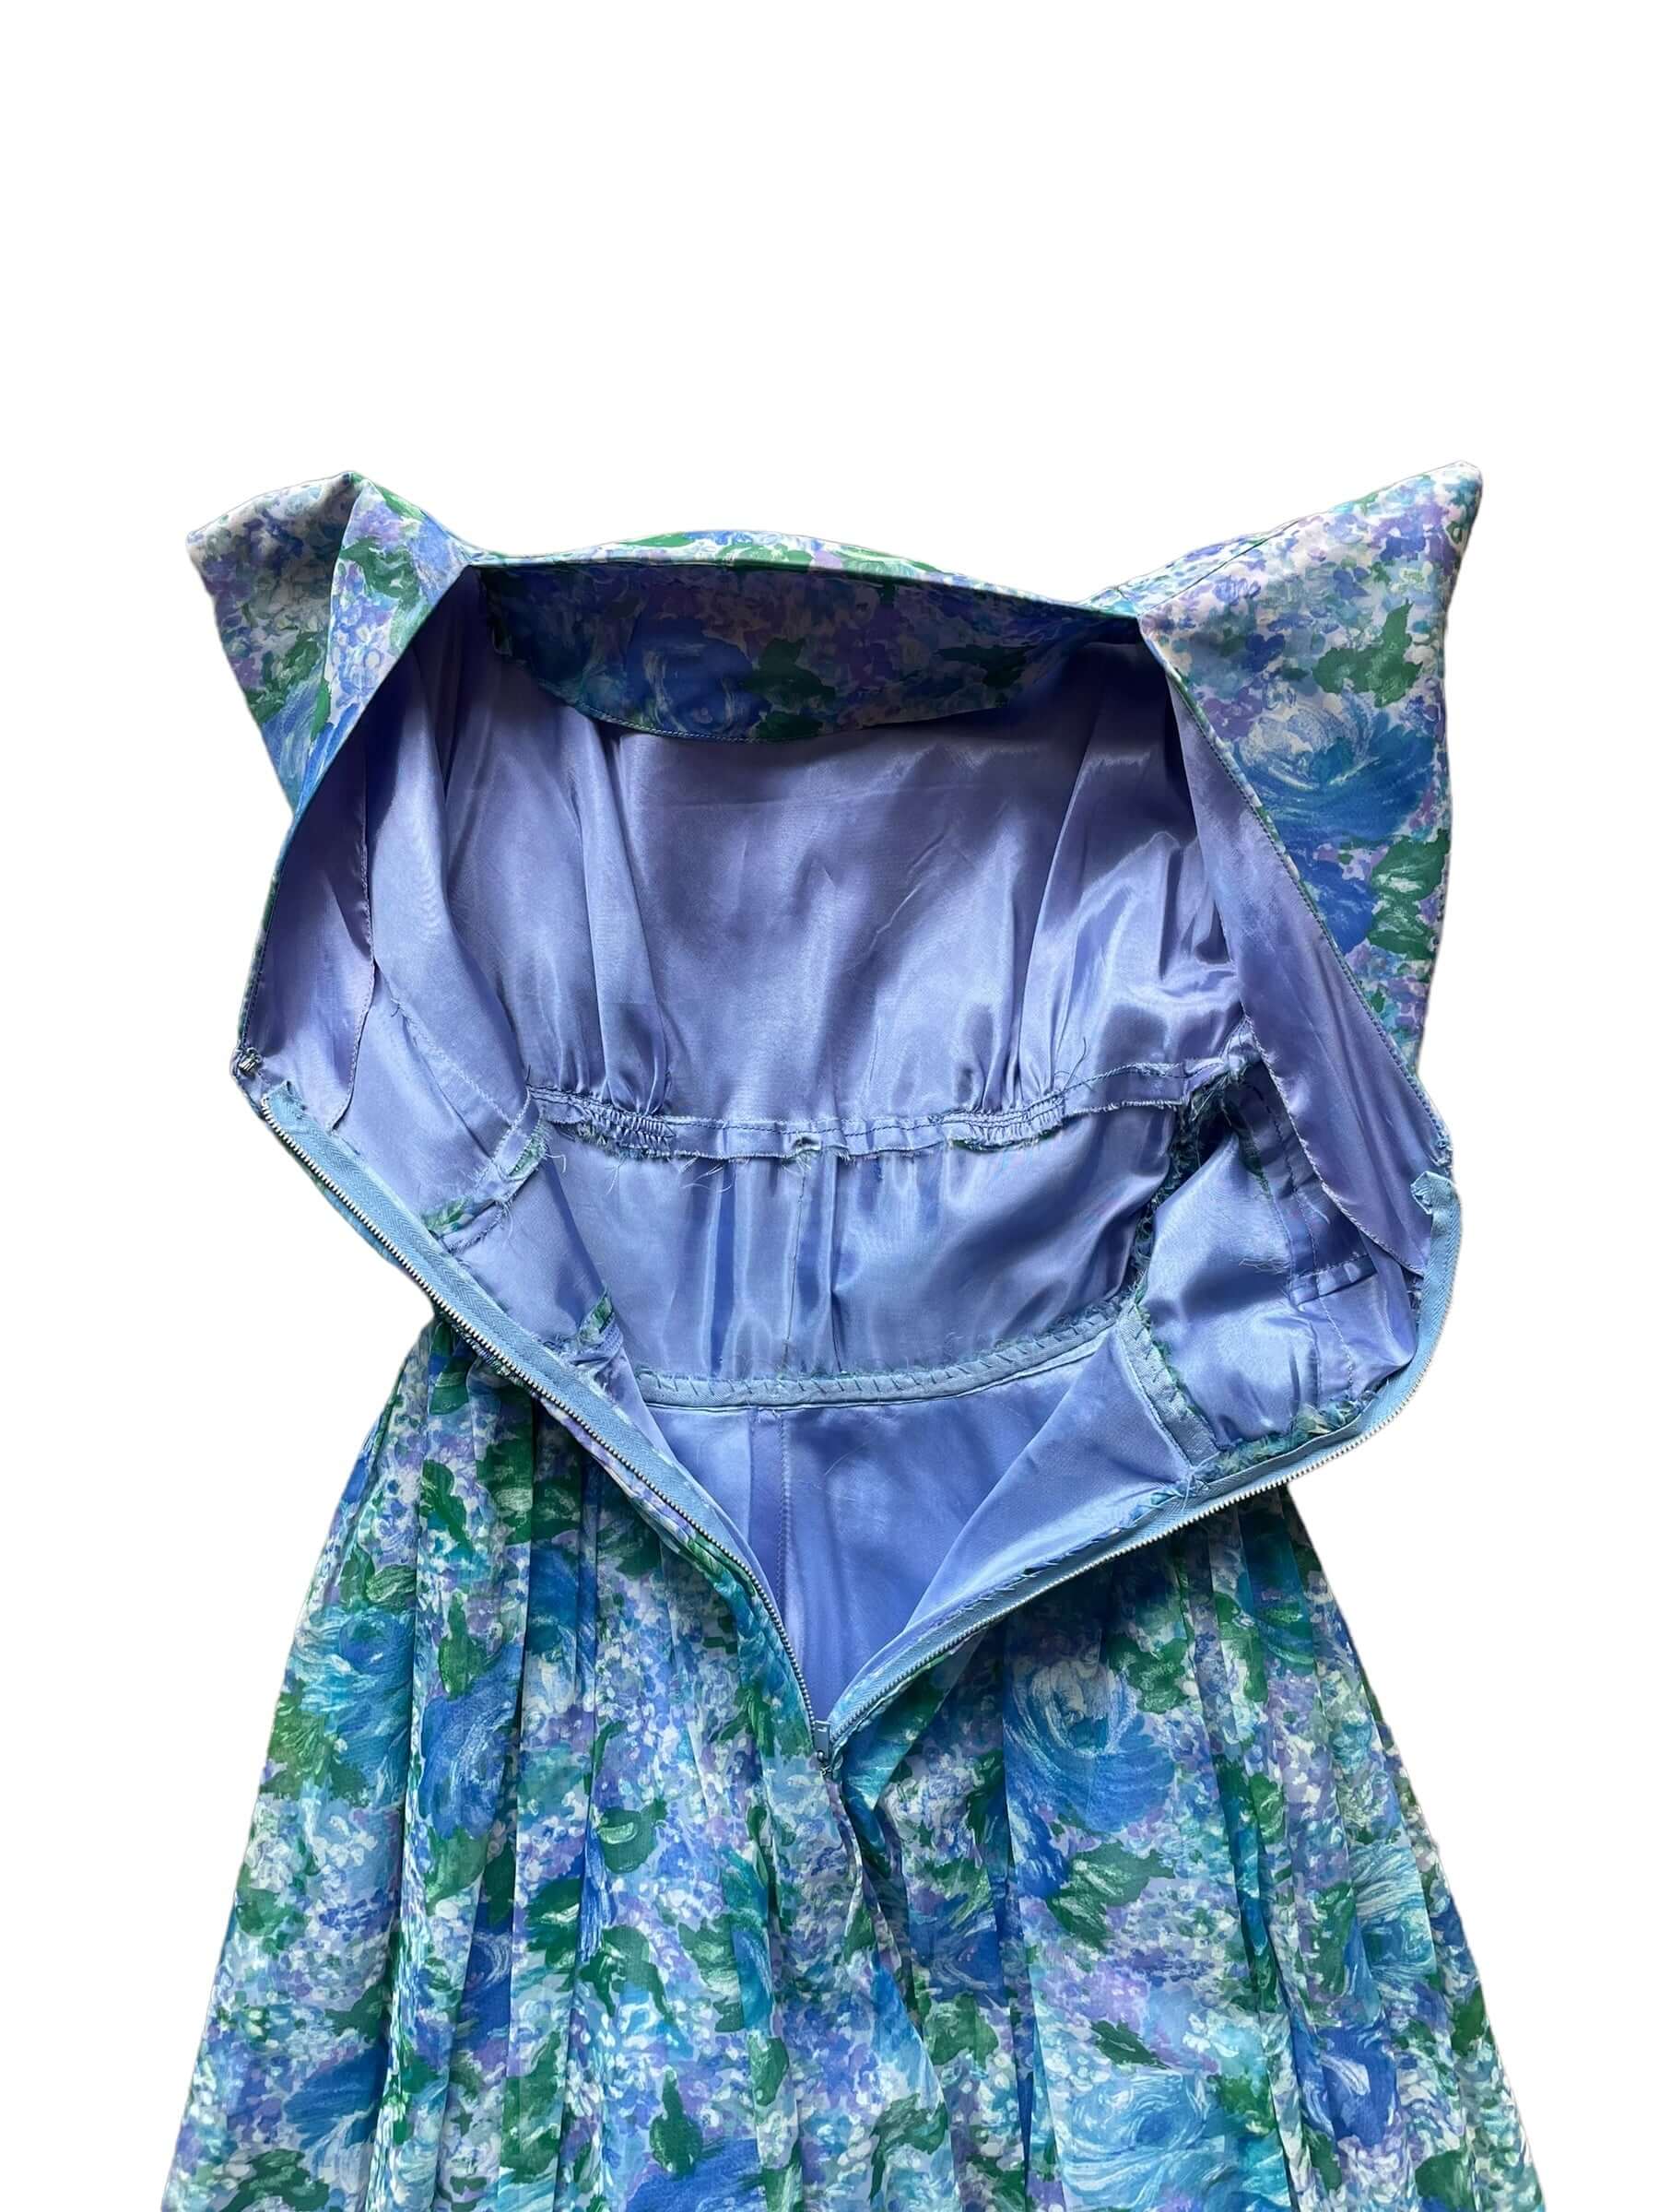 Open zipped back of Vintage 1950s Formal Blue Floral Dress SZ XS | Seattle True Vintage Dresses | Barn Owl Vintage Ladies Clothing